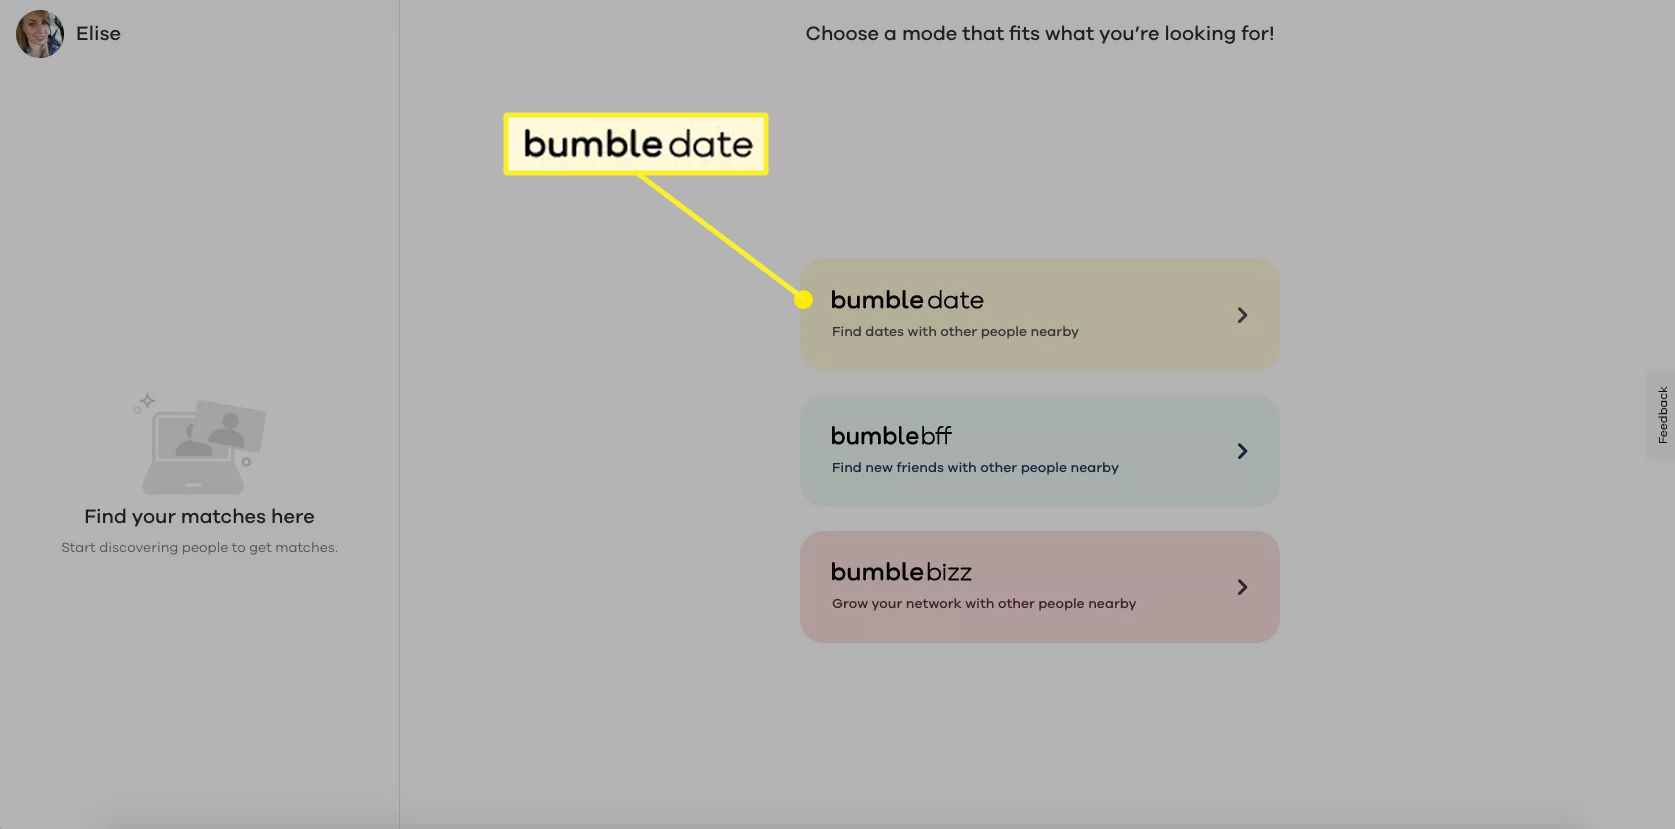 Bumble.com zobrazující možnosti BumbleDate, BumbleBFF a BumbleBizz